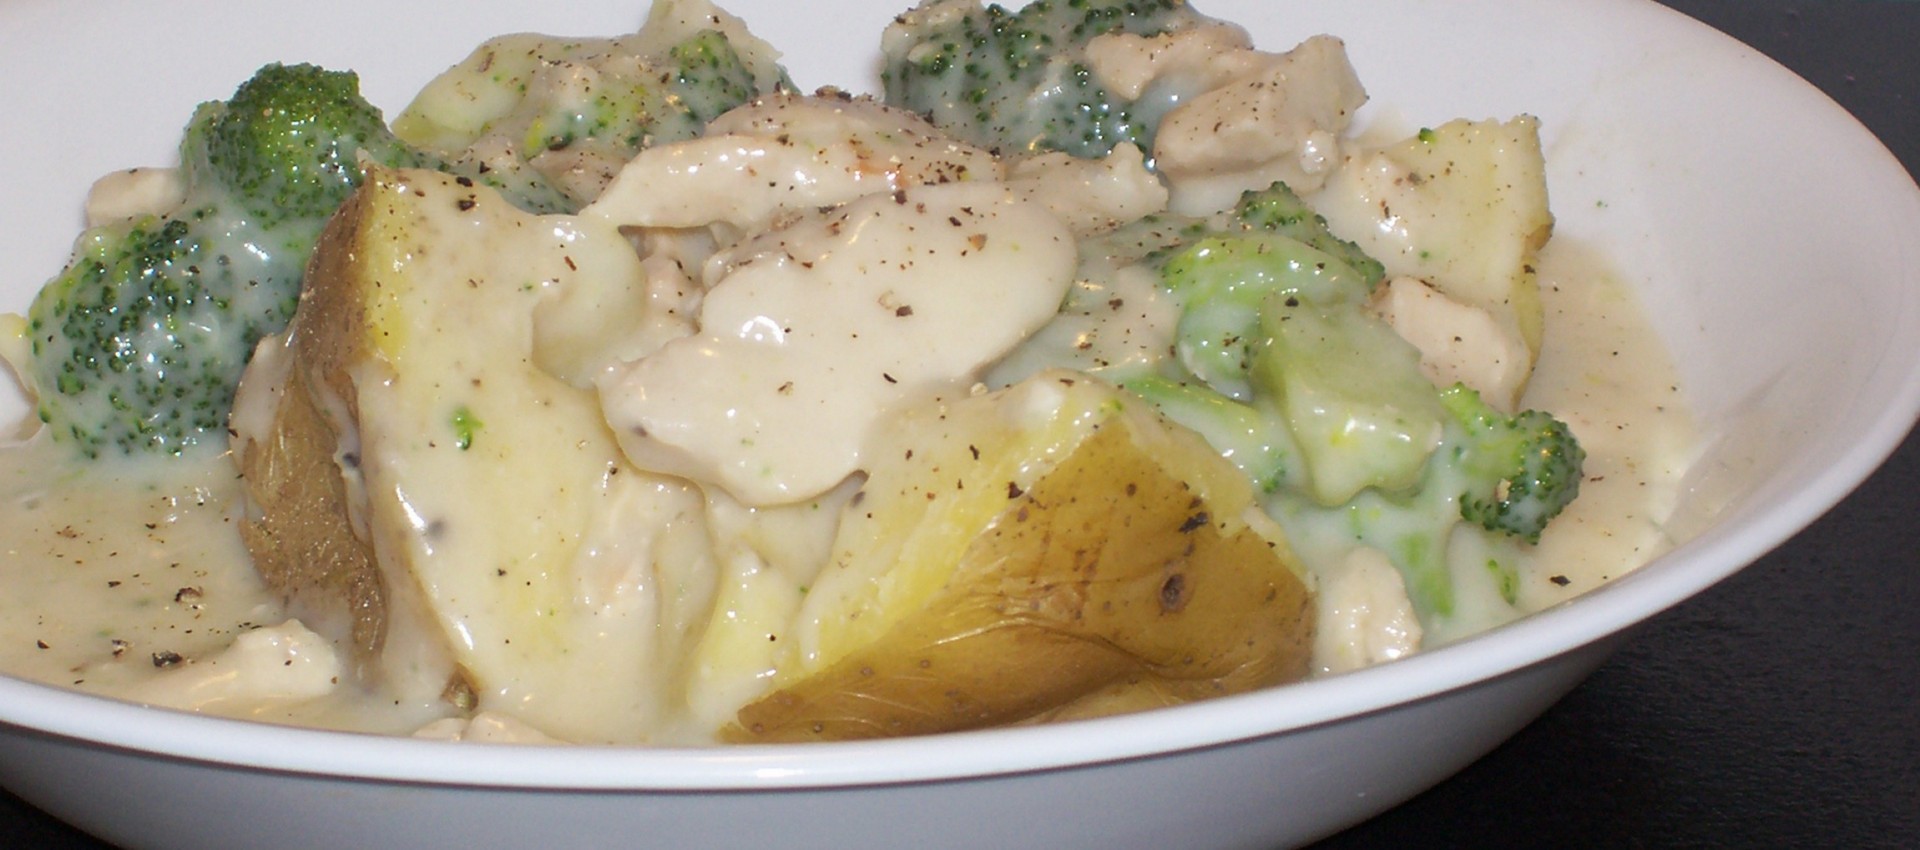 food chicken & broccoli baked potato chicken & broccoli on baked potato free photo